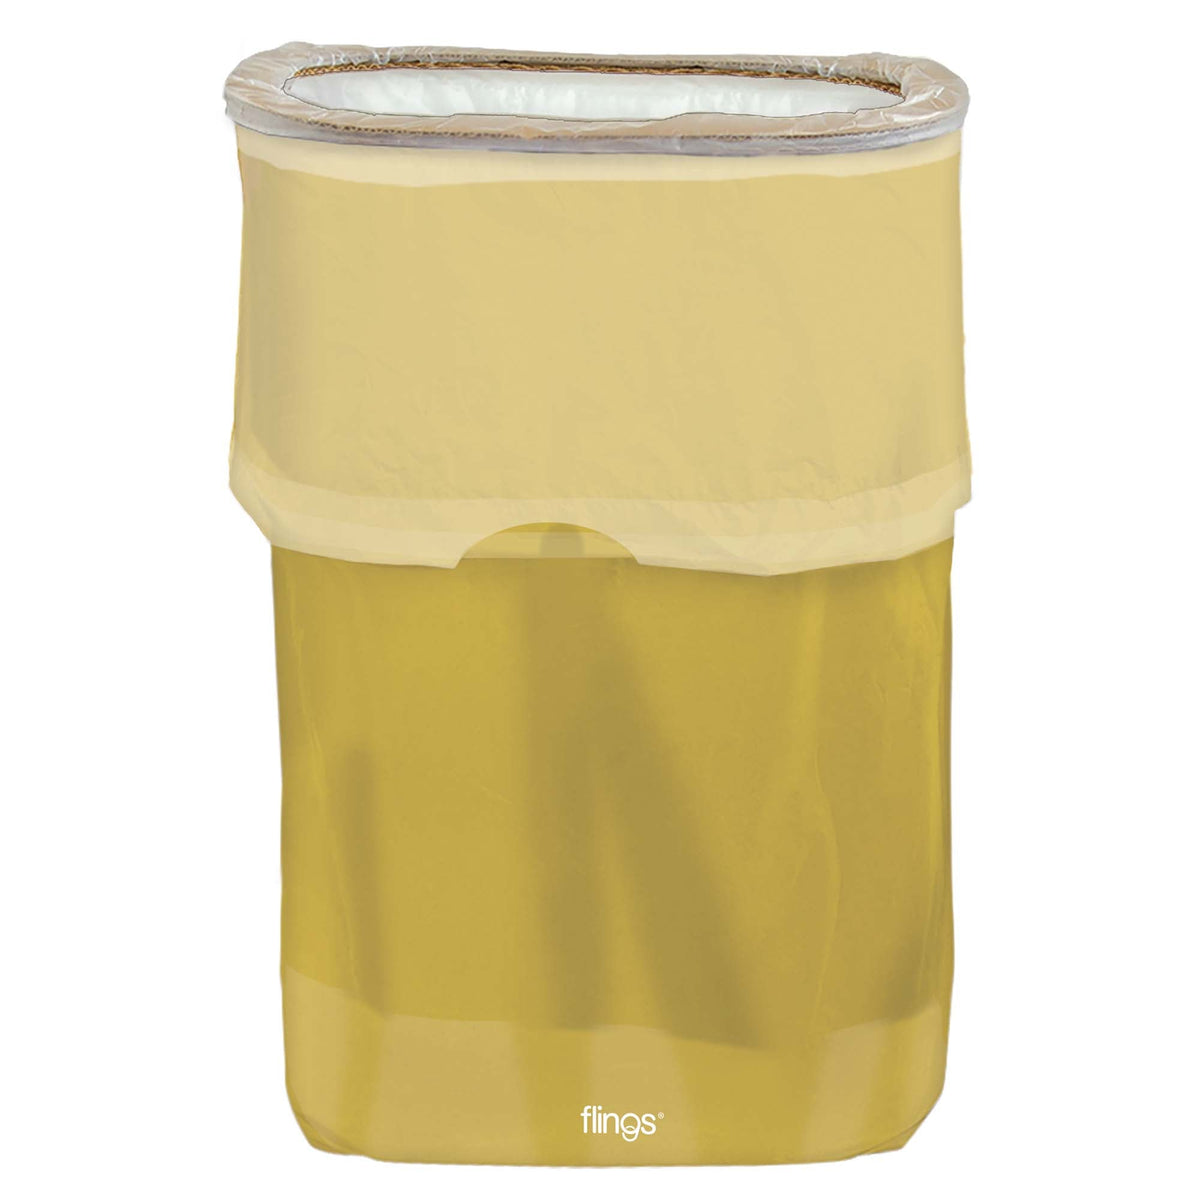 Gold Flings Pop-Up Disposable Trash Bin